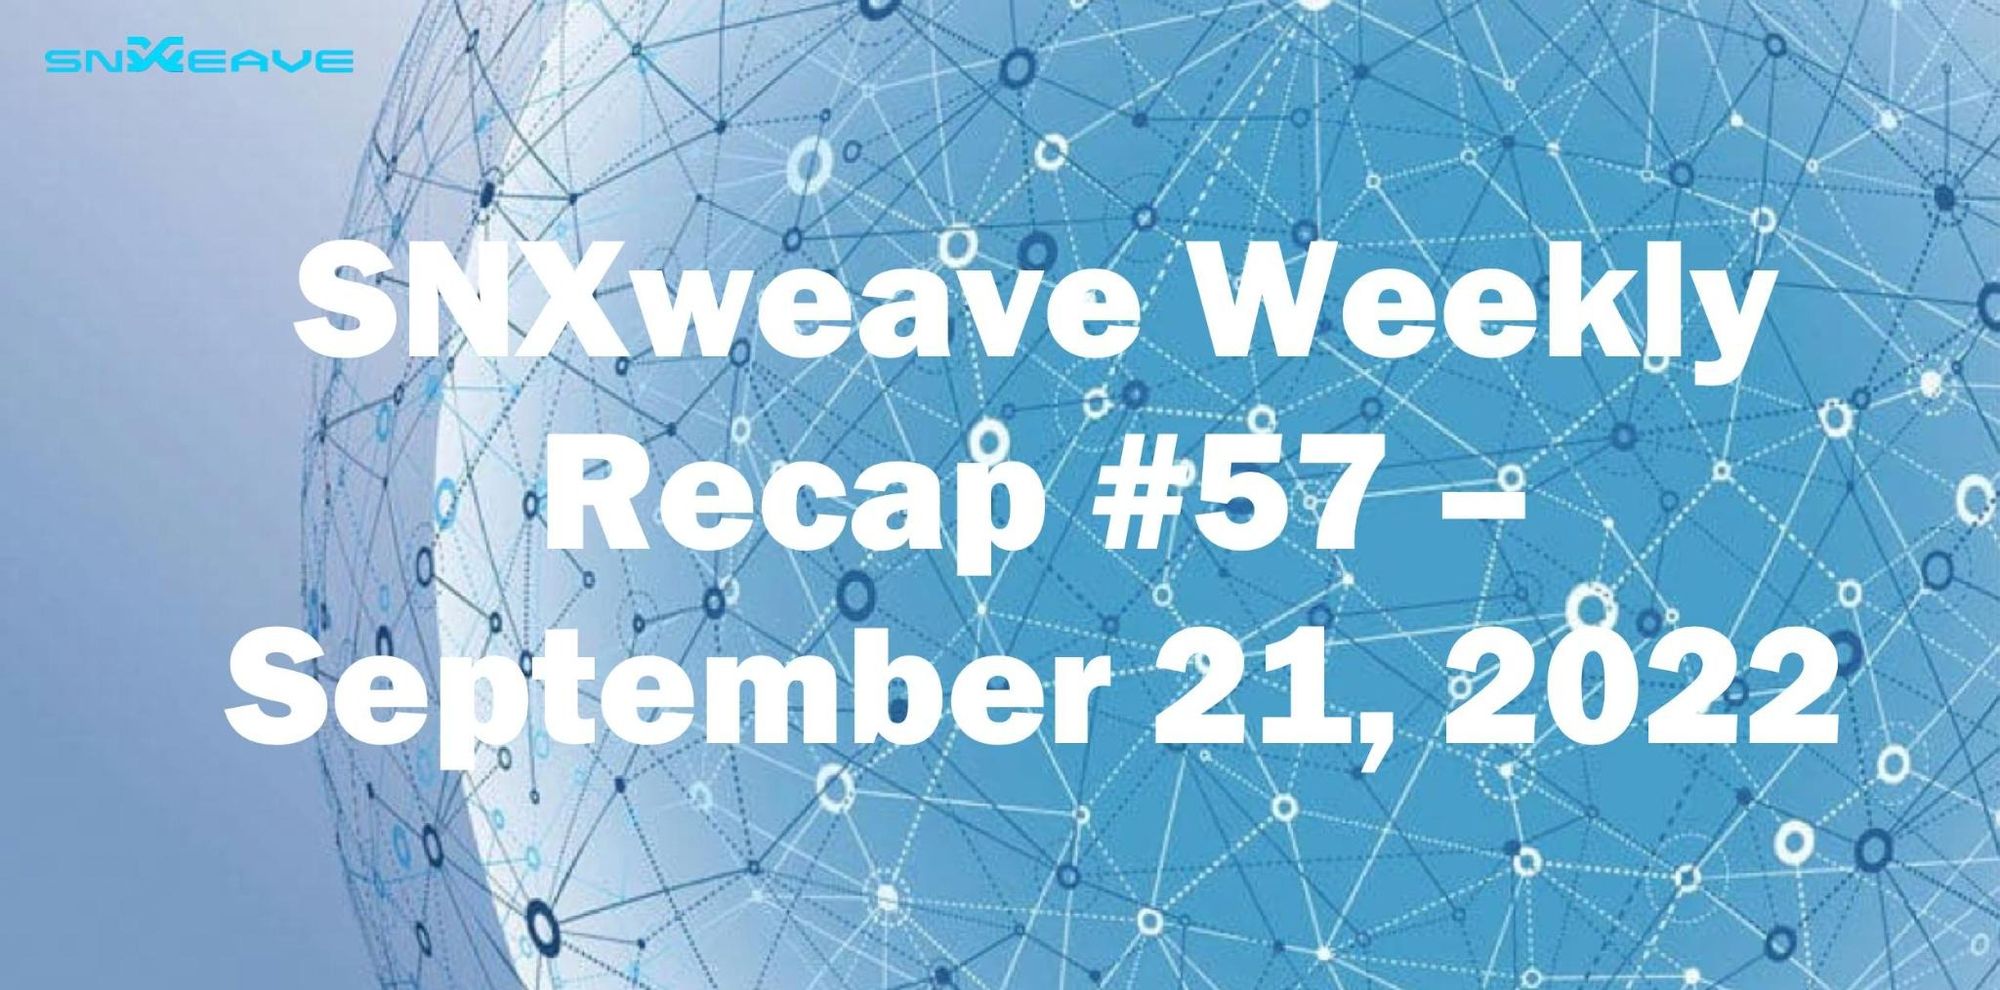 SNXweave Weekly Recap 57